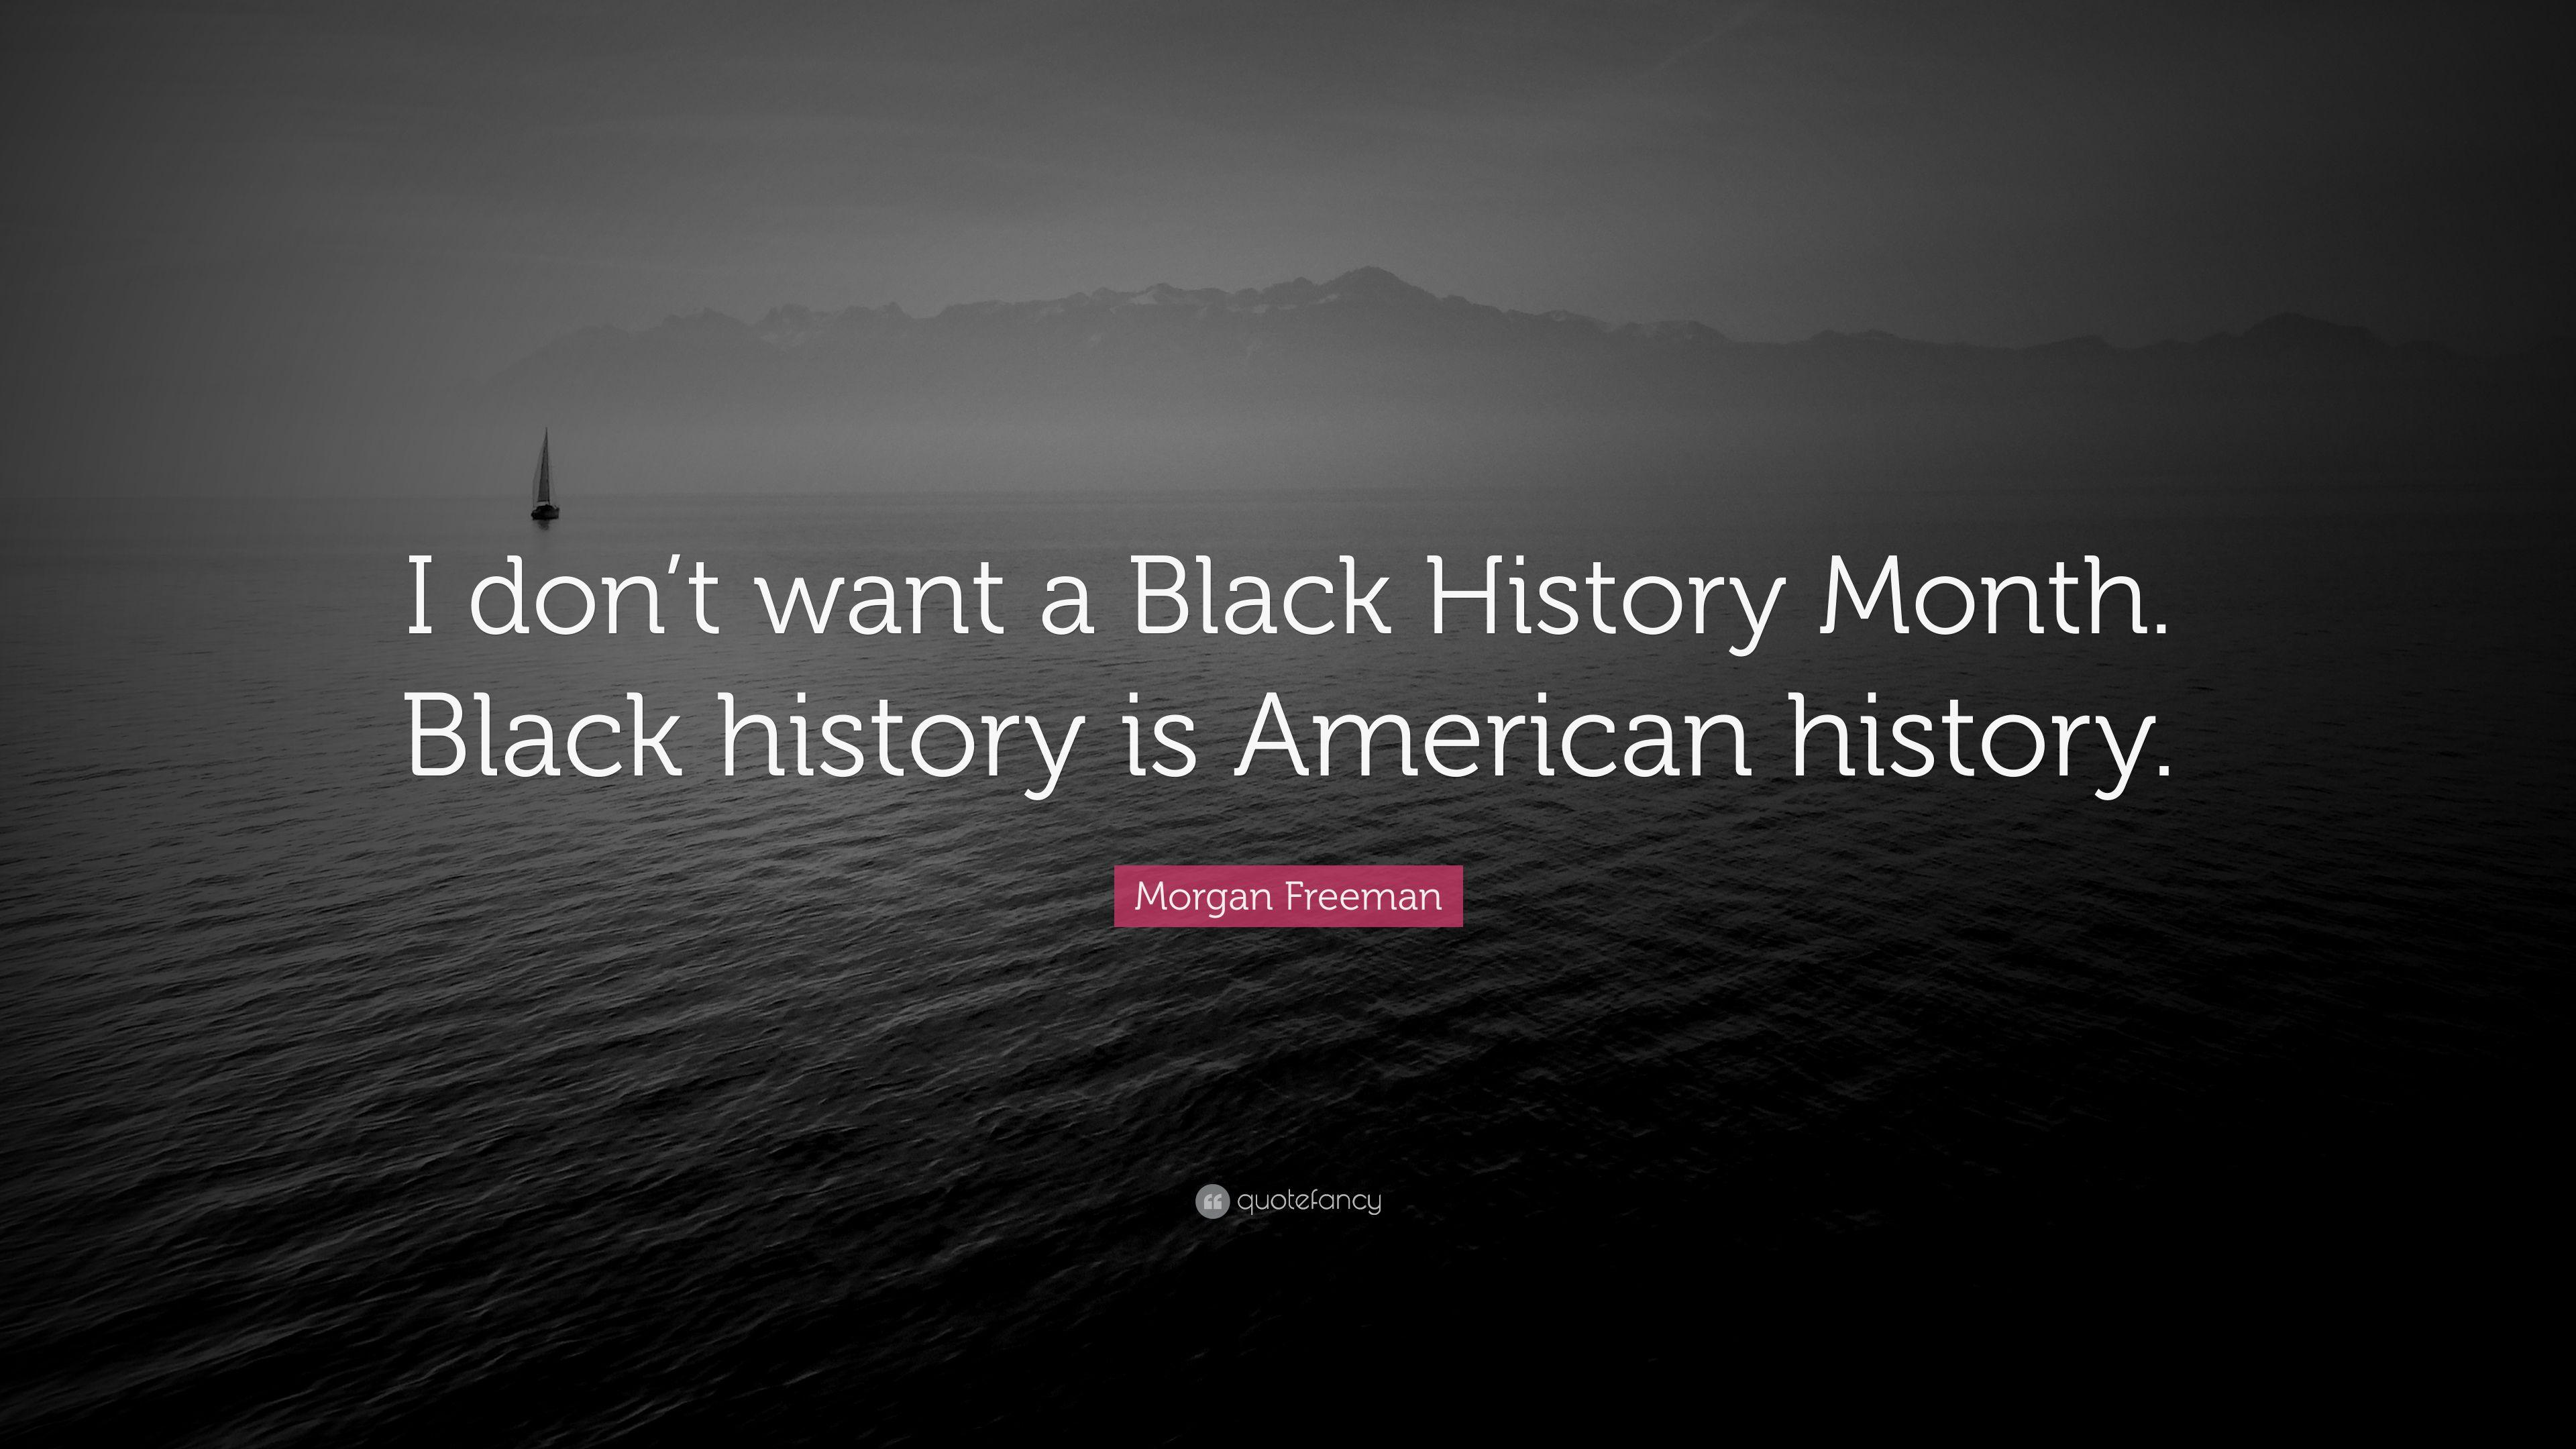 Morgan Freeman Quote: “I don't want a Black History Month. Black